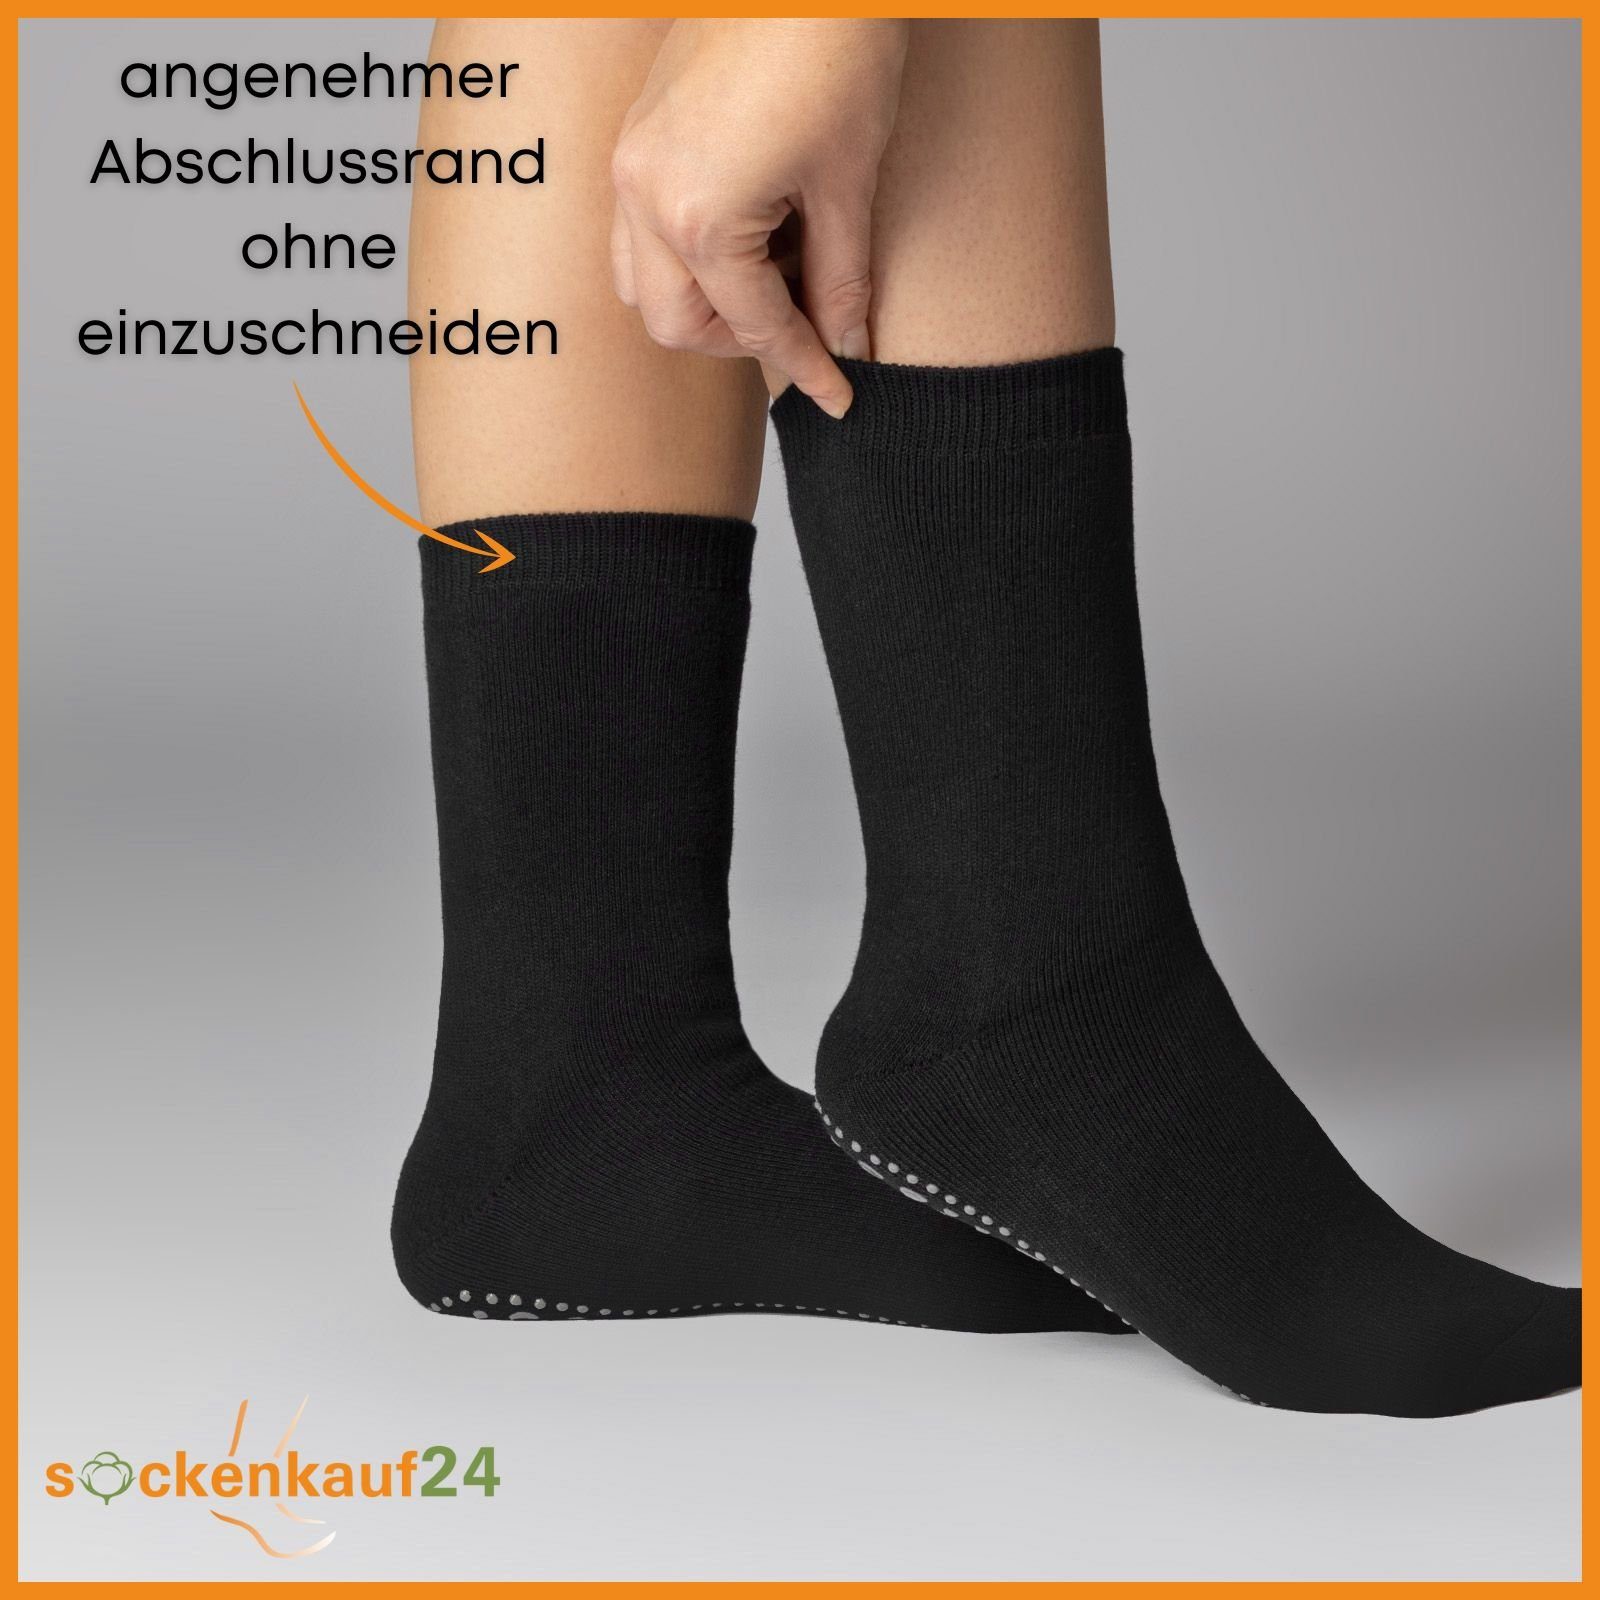 sockenkauf24 - Stoppersocken Socken 3 Noppen Paar (Schwarz, ABS Socken Damen WP Rutsch 3-Paar, ABS-Socken oder Anti "Premium" 6 43-46) 8600 Herren